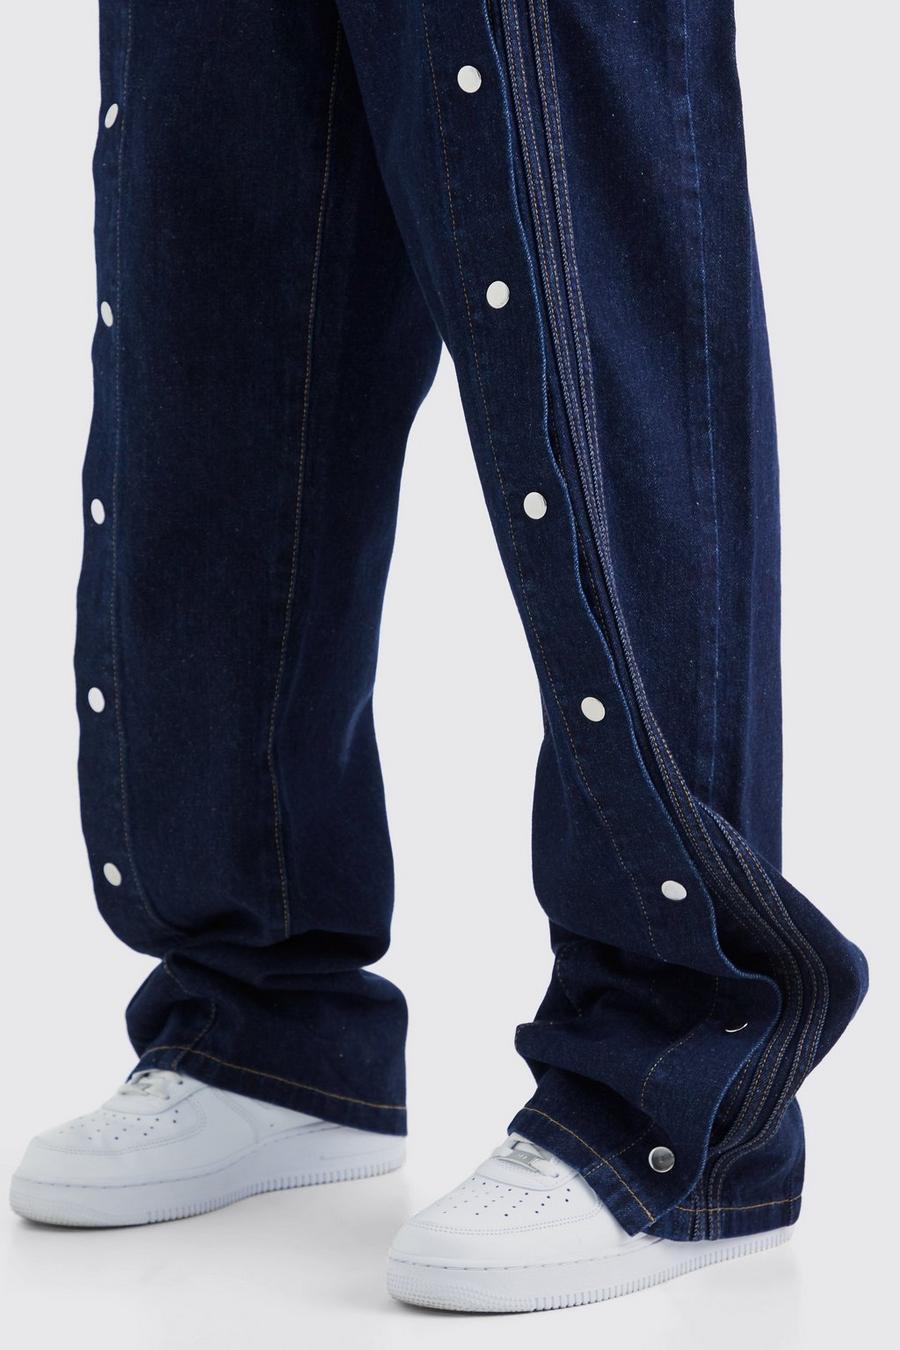 spodnie baggy jeans guziki napy zdobienie